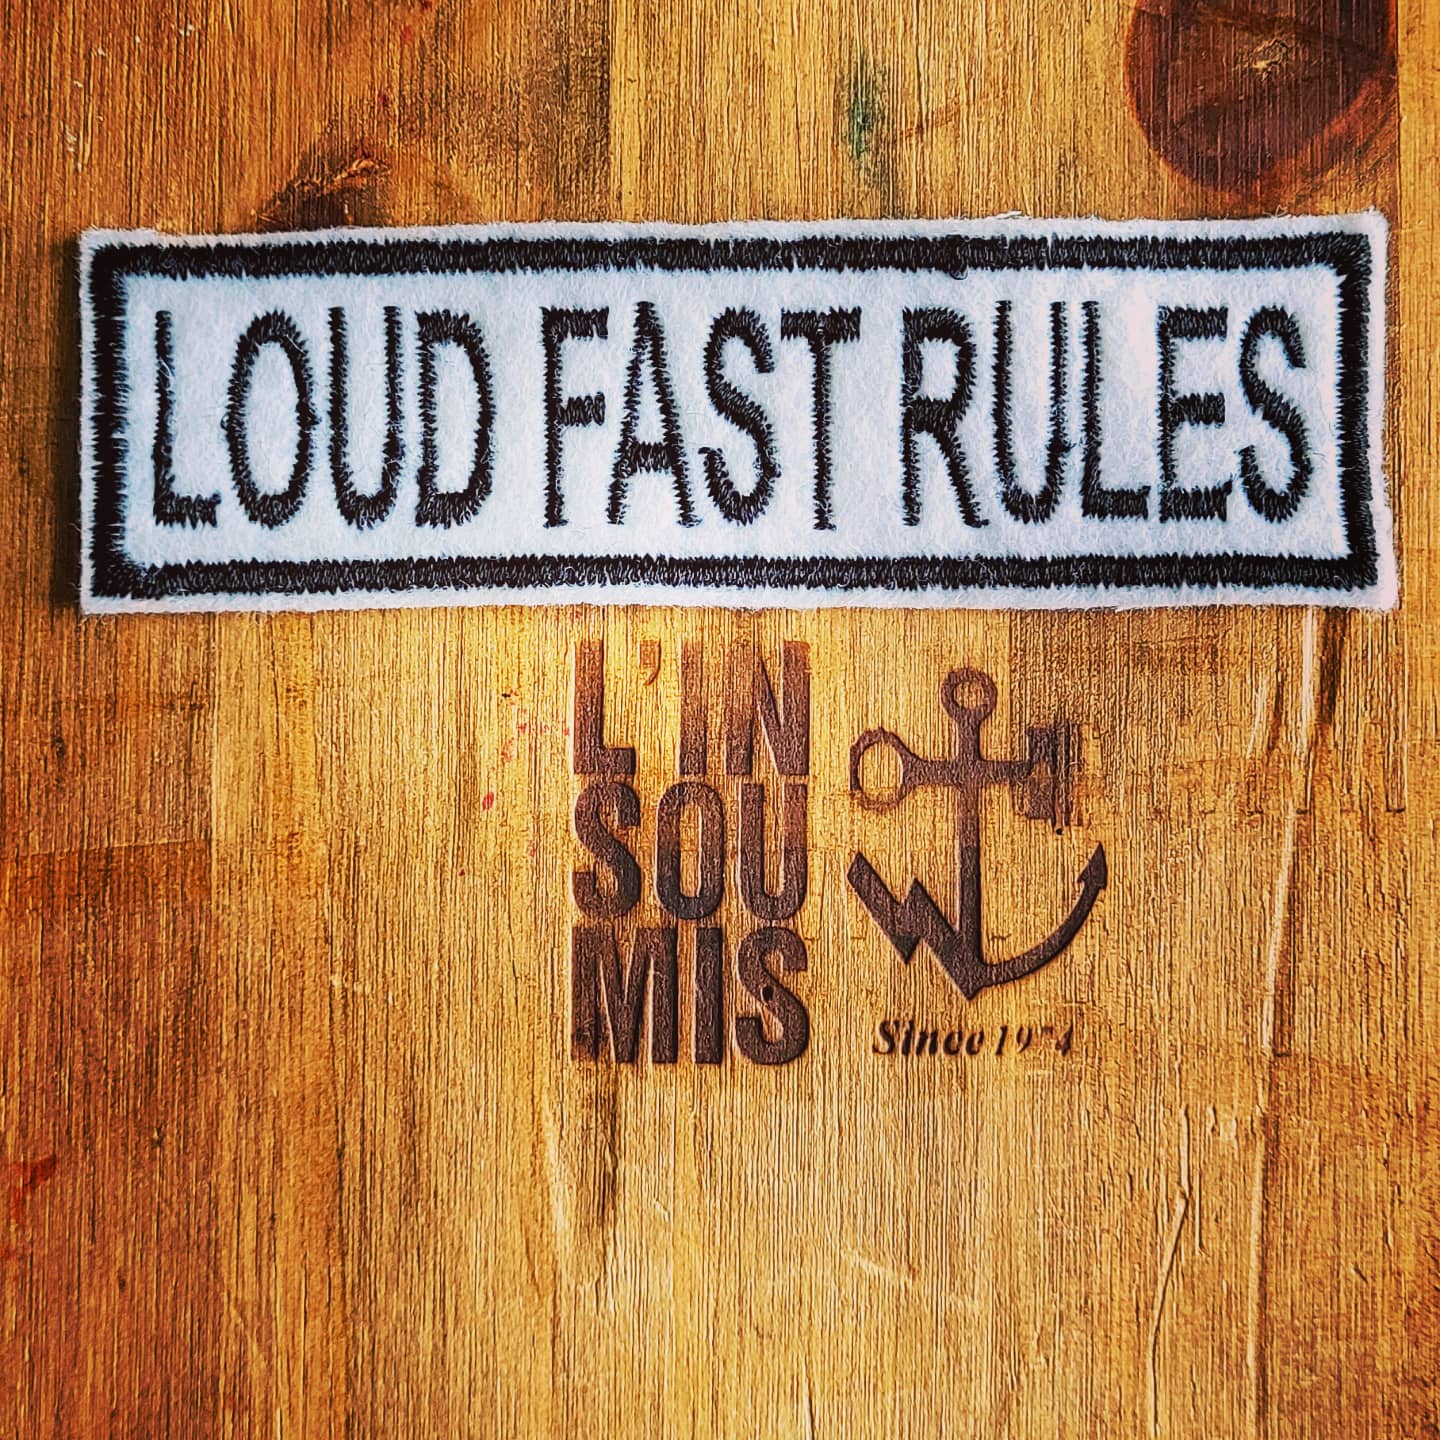 Loud Fast Rules